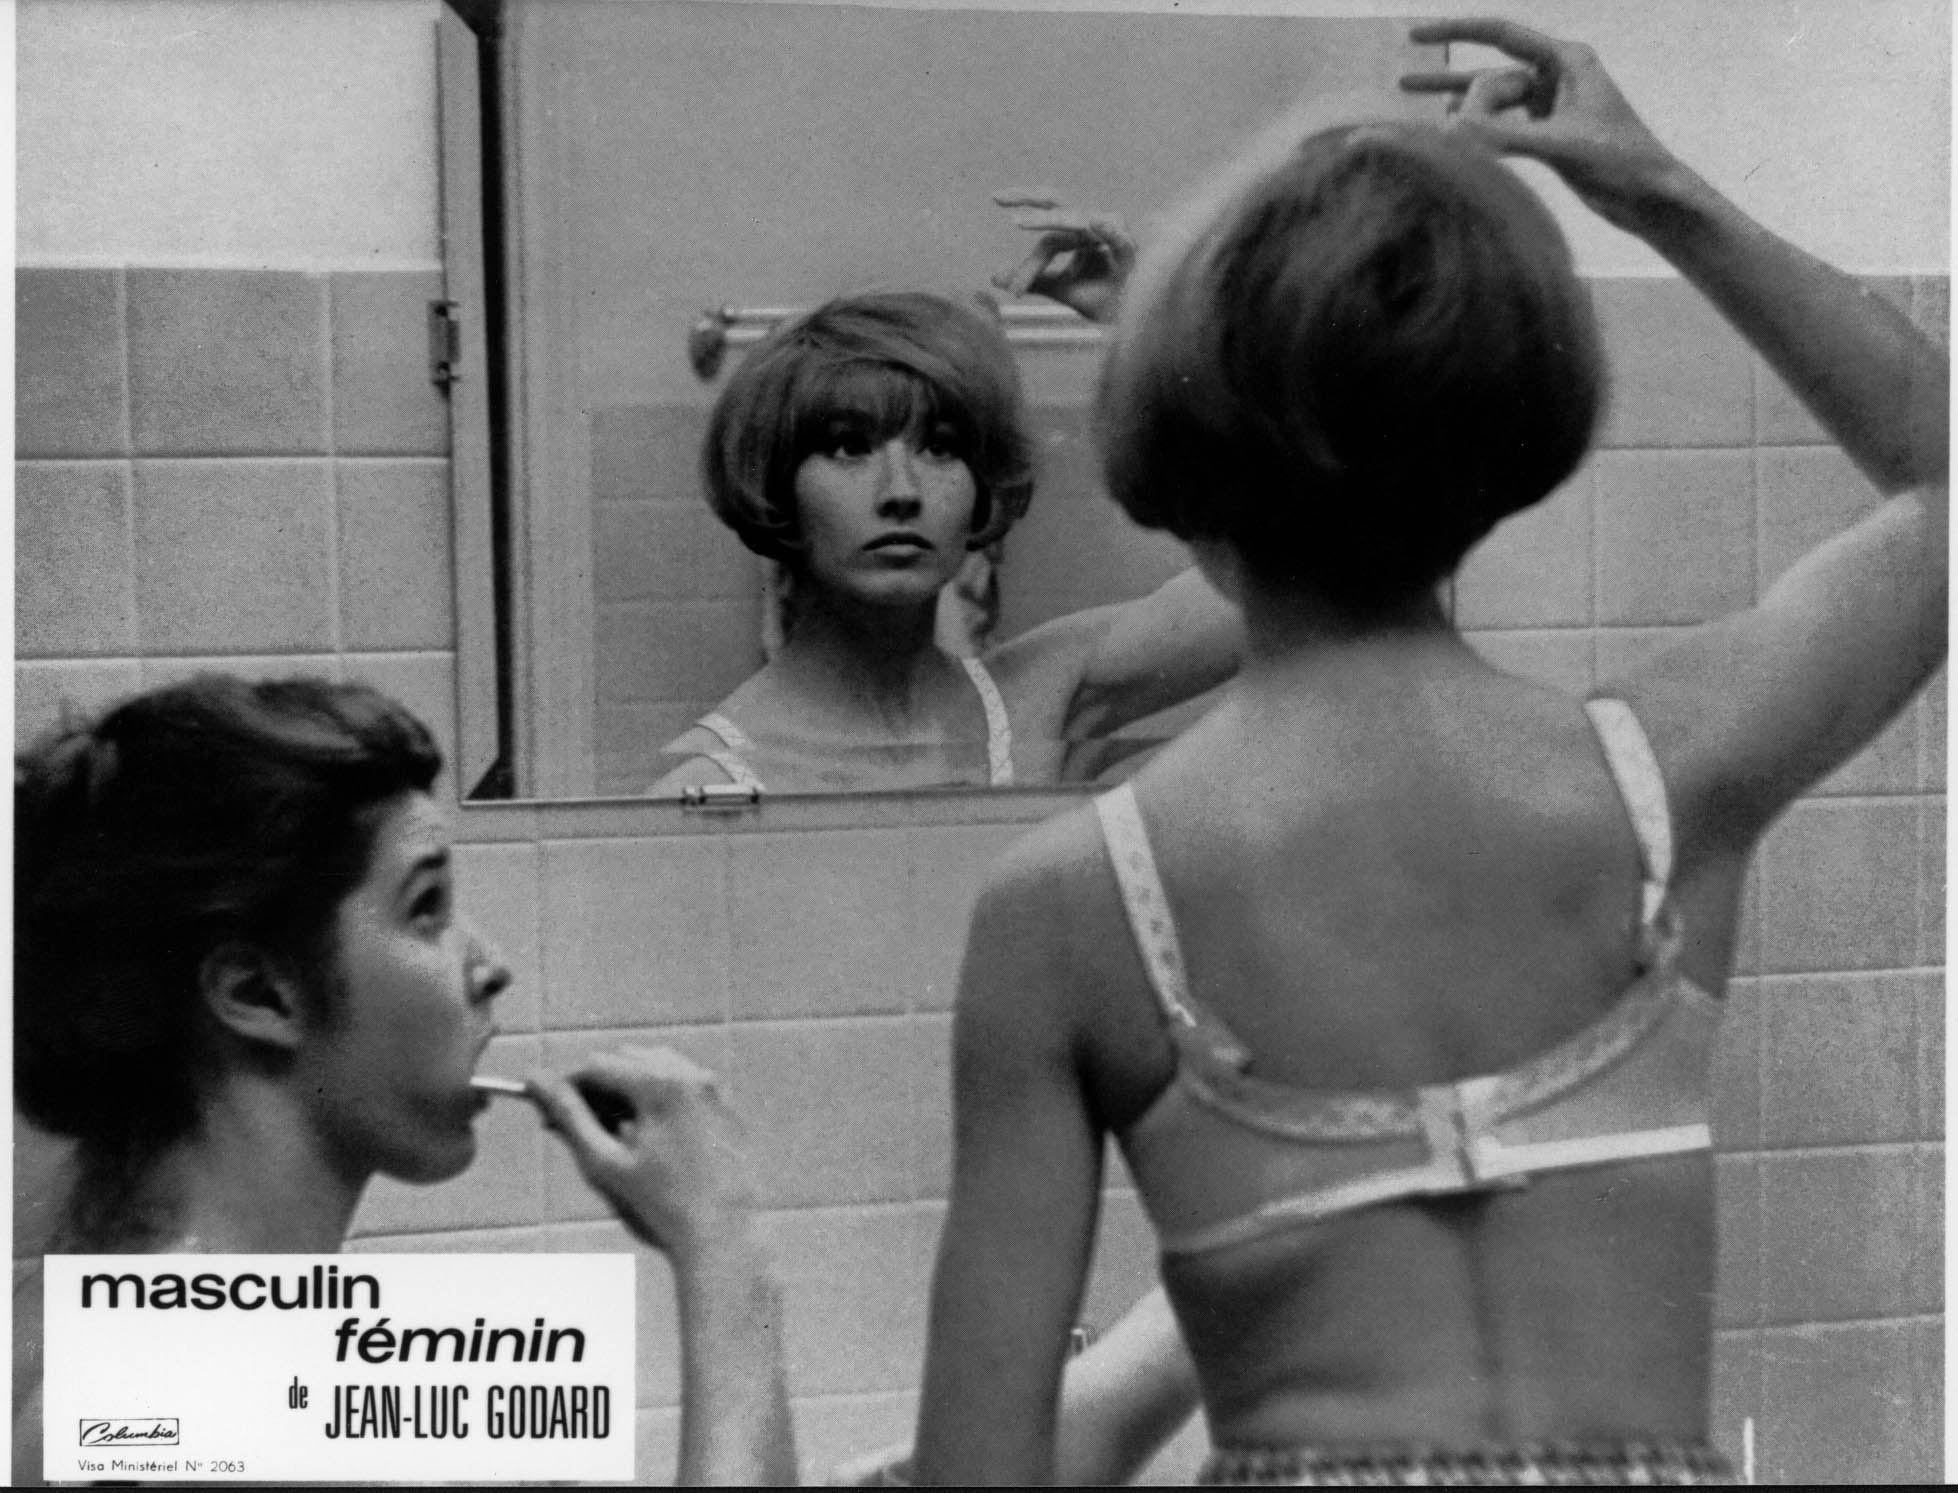 Masculine Feminine (1966) Screenshot 5 